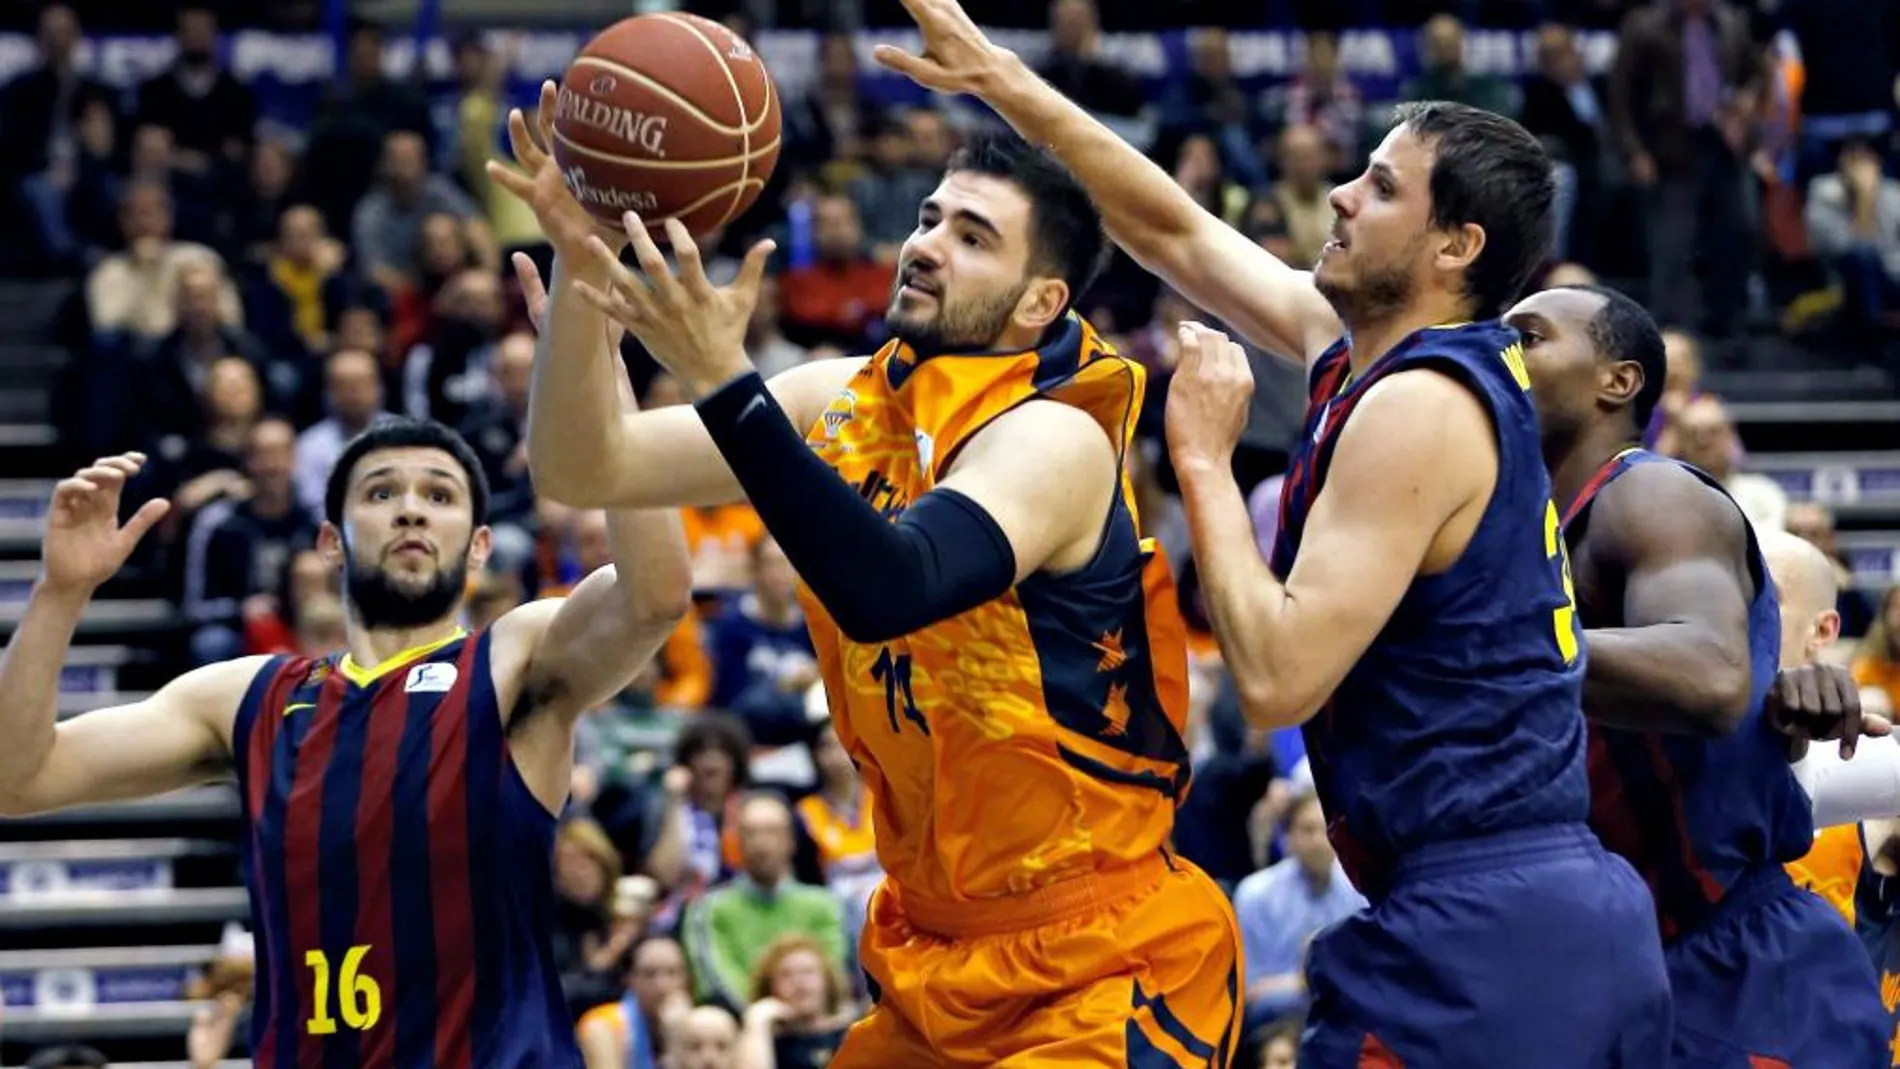 El ala pivot montenegrino del Valencia Basket Bojan Dubljevic intenta superar la defensa del alero esloveno del Barcelona Bostjan Nachbar